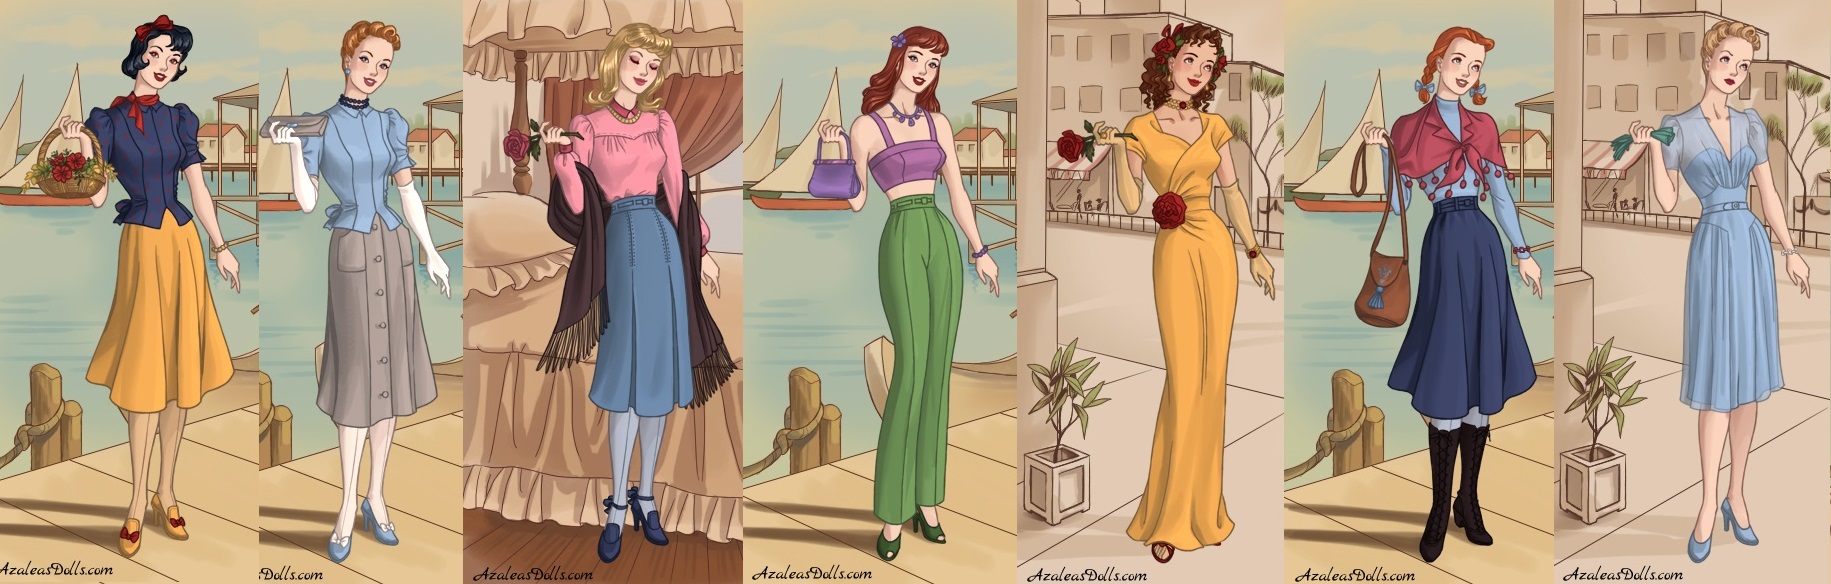 40s Fashion (dress up game) by AzaleasDolls on DeviantArt